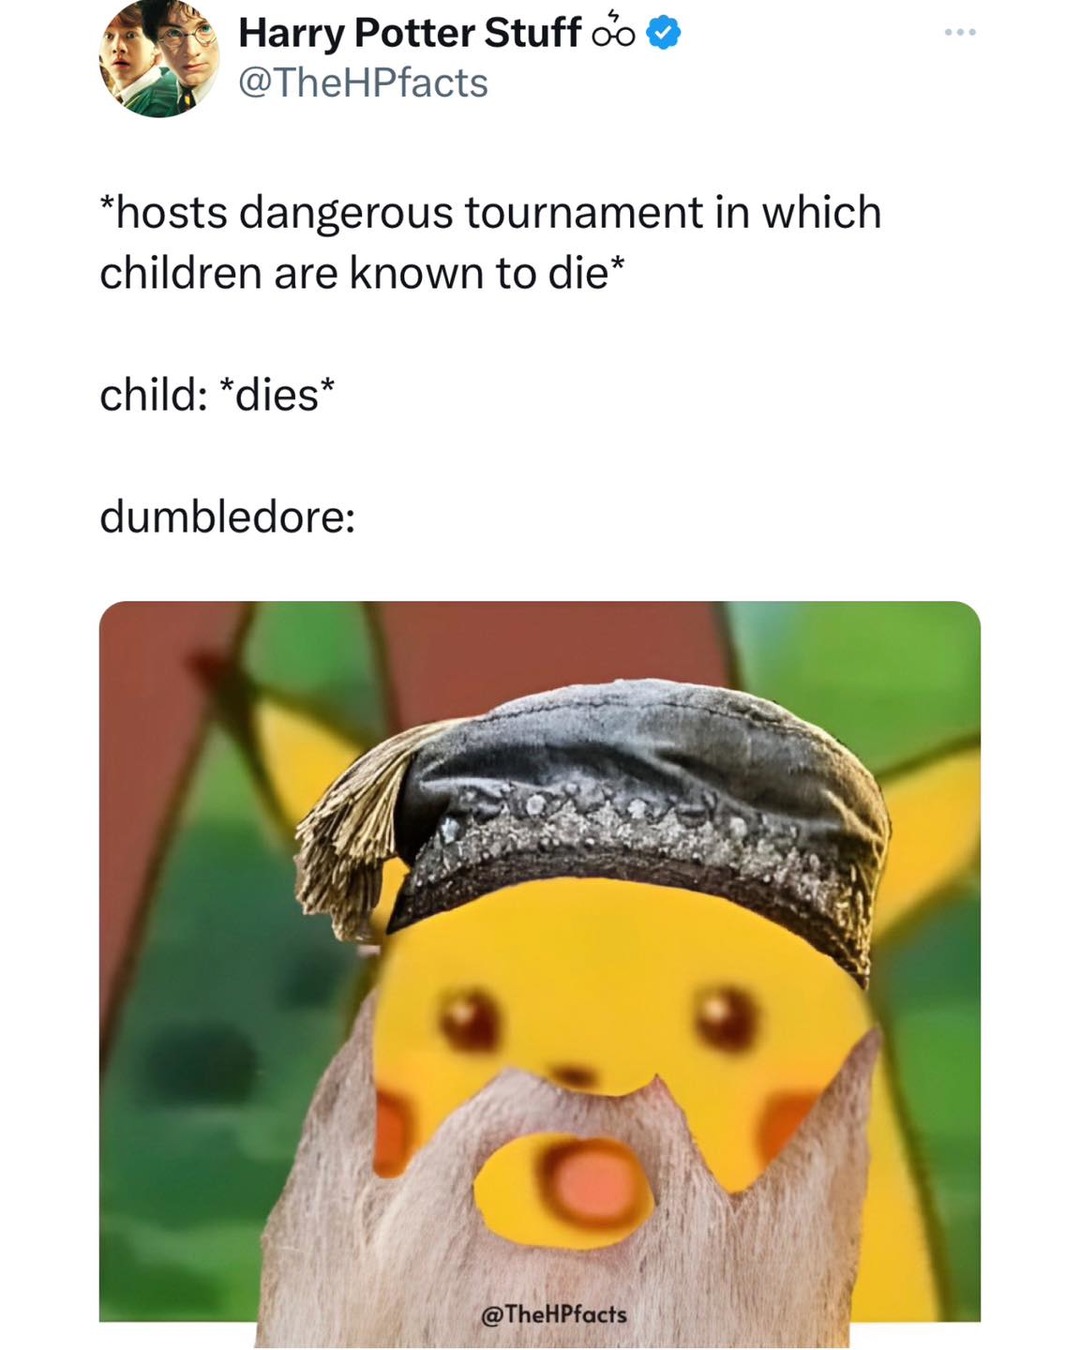 Dumbledore “it wasn’t HP so it’s all good” - meme